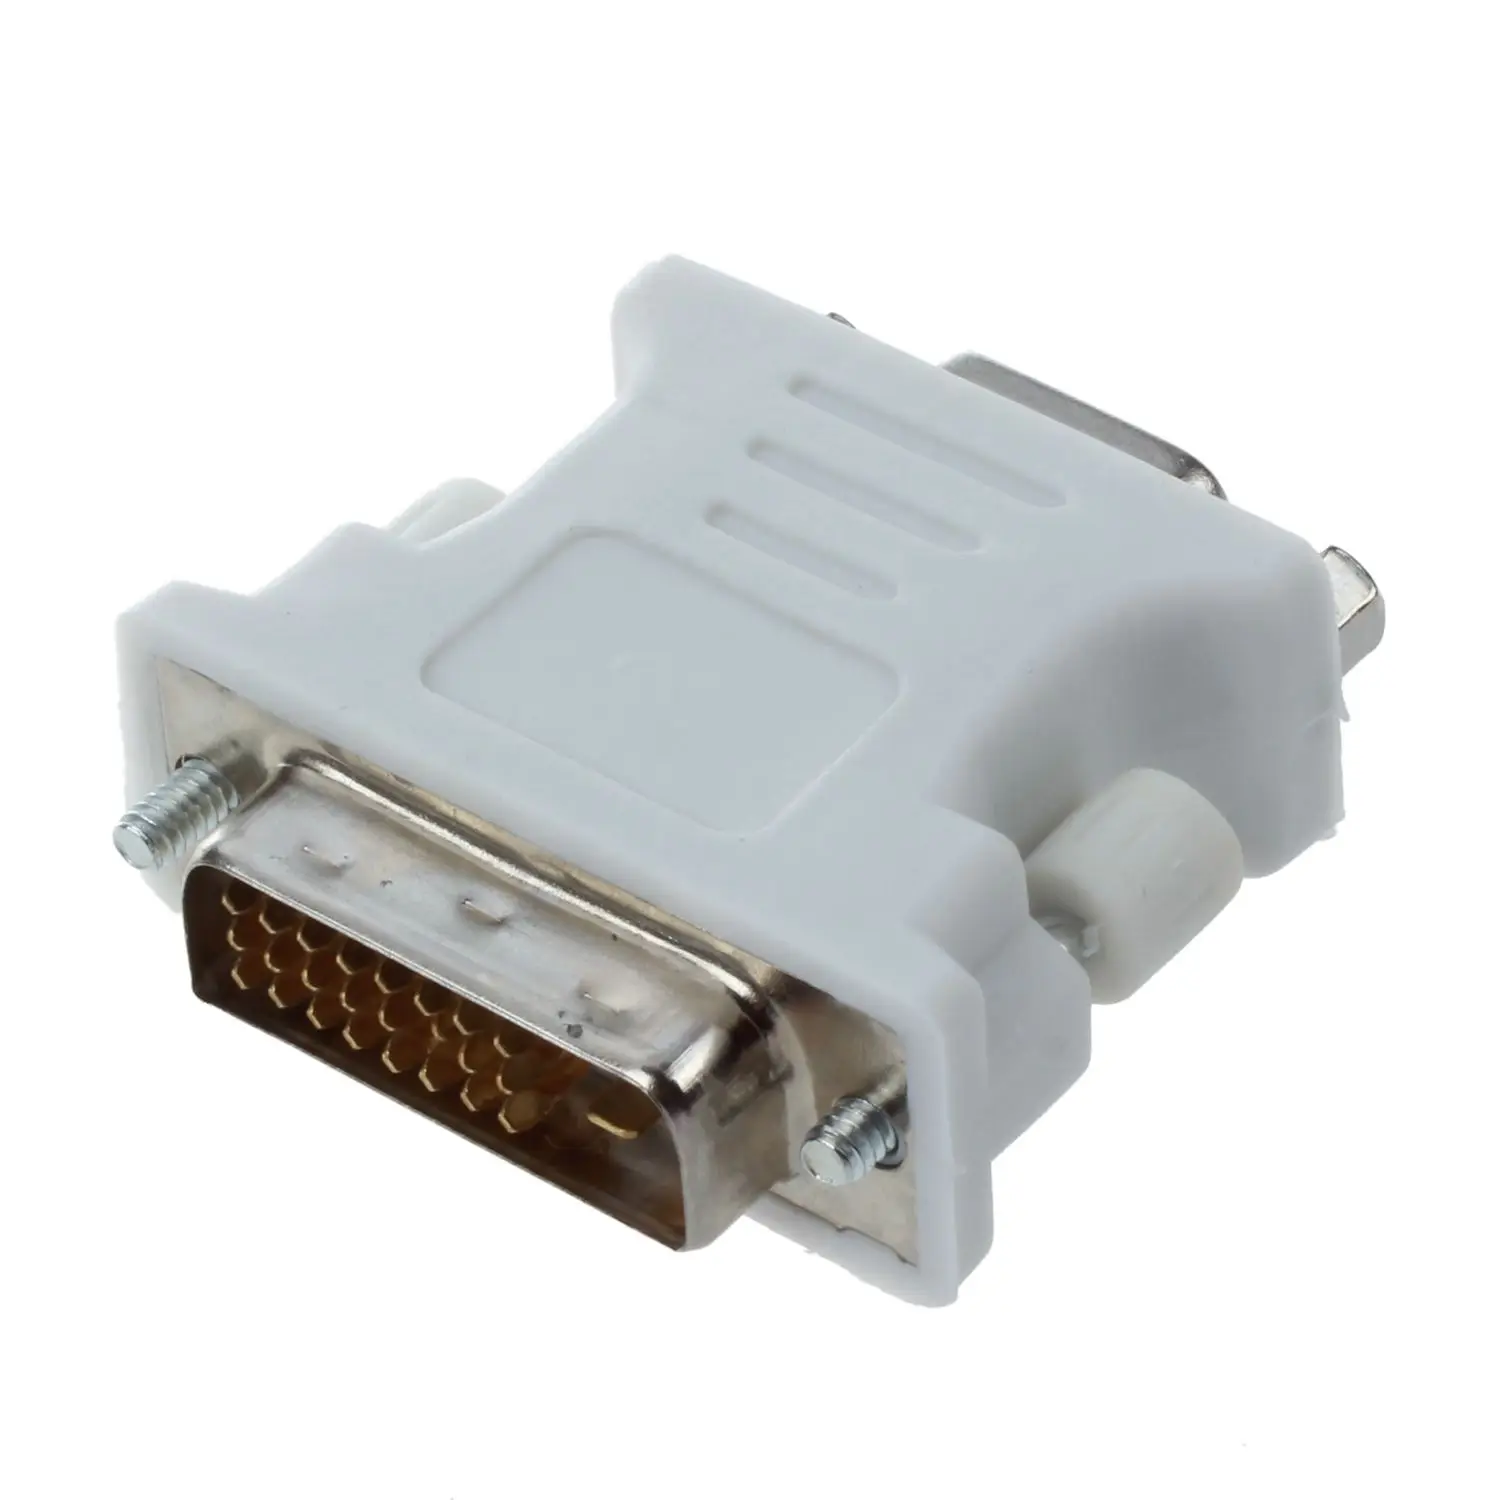 

semoic DVI male adapter (DVI - D 24 1) to female VGA (15-pin)